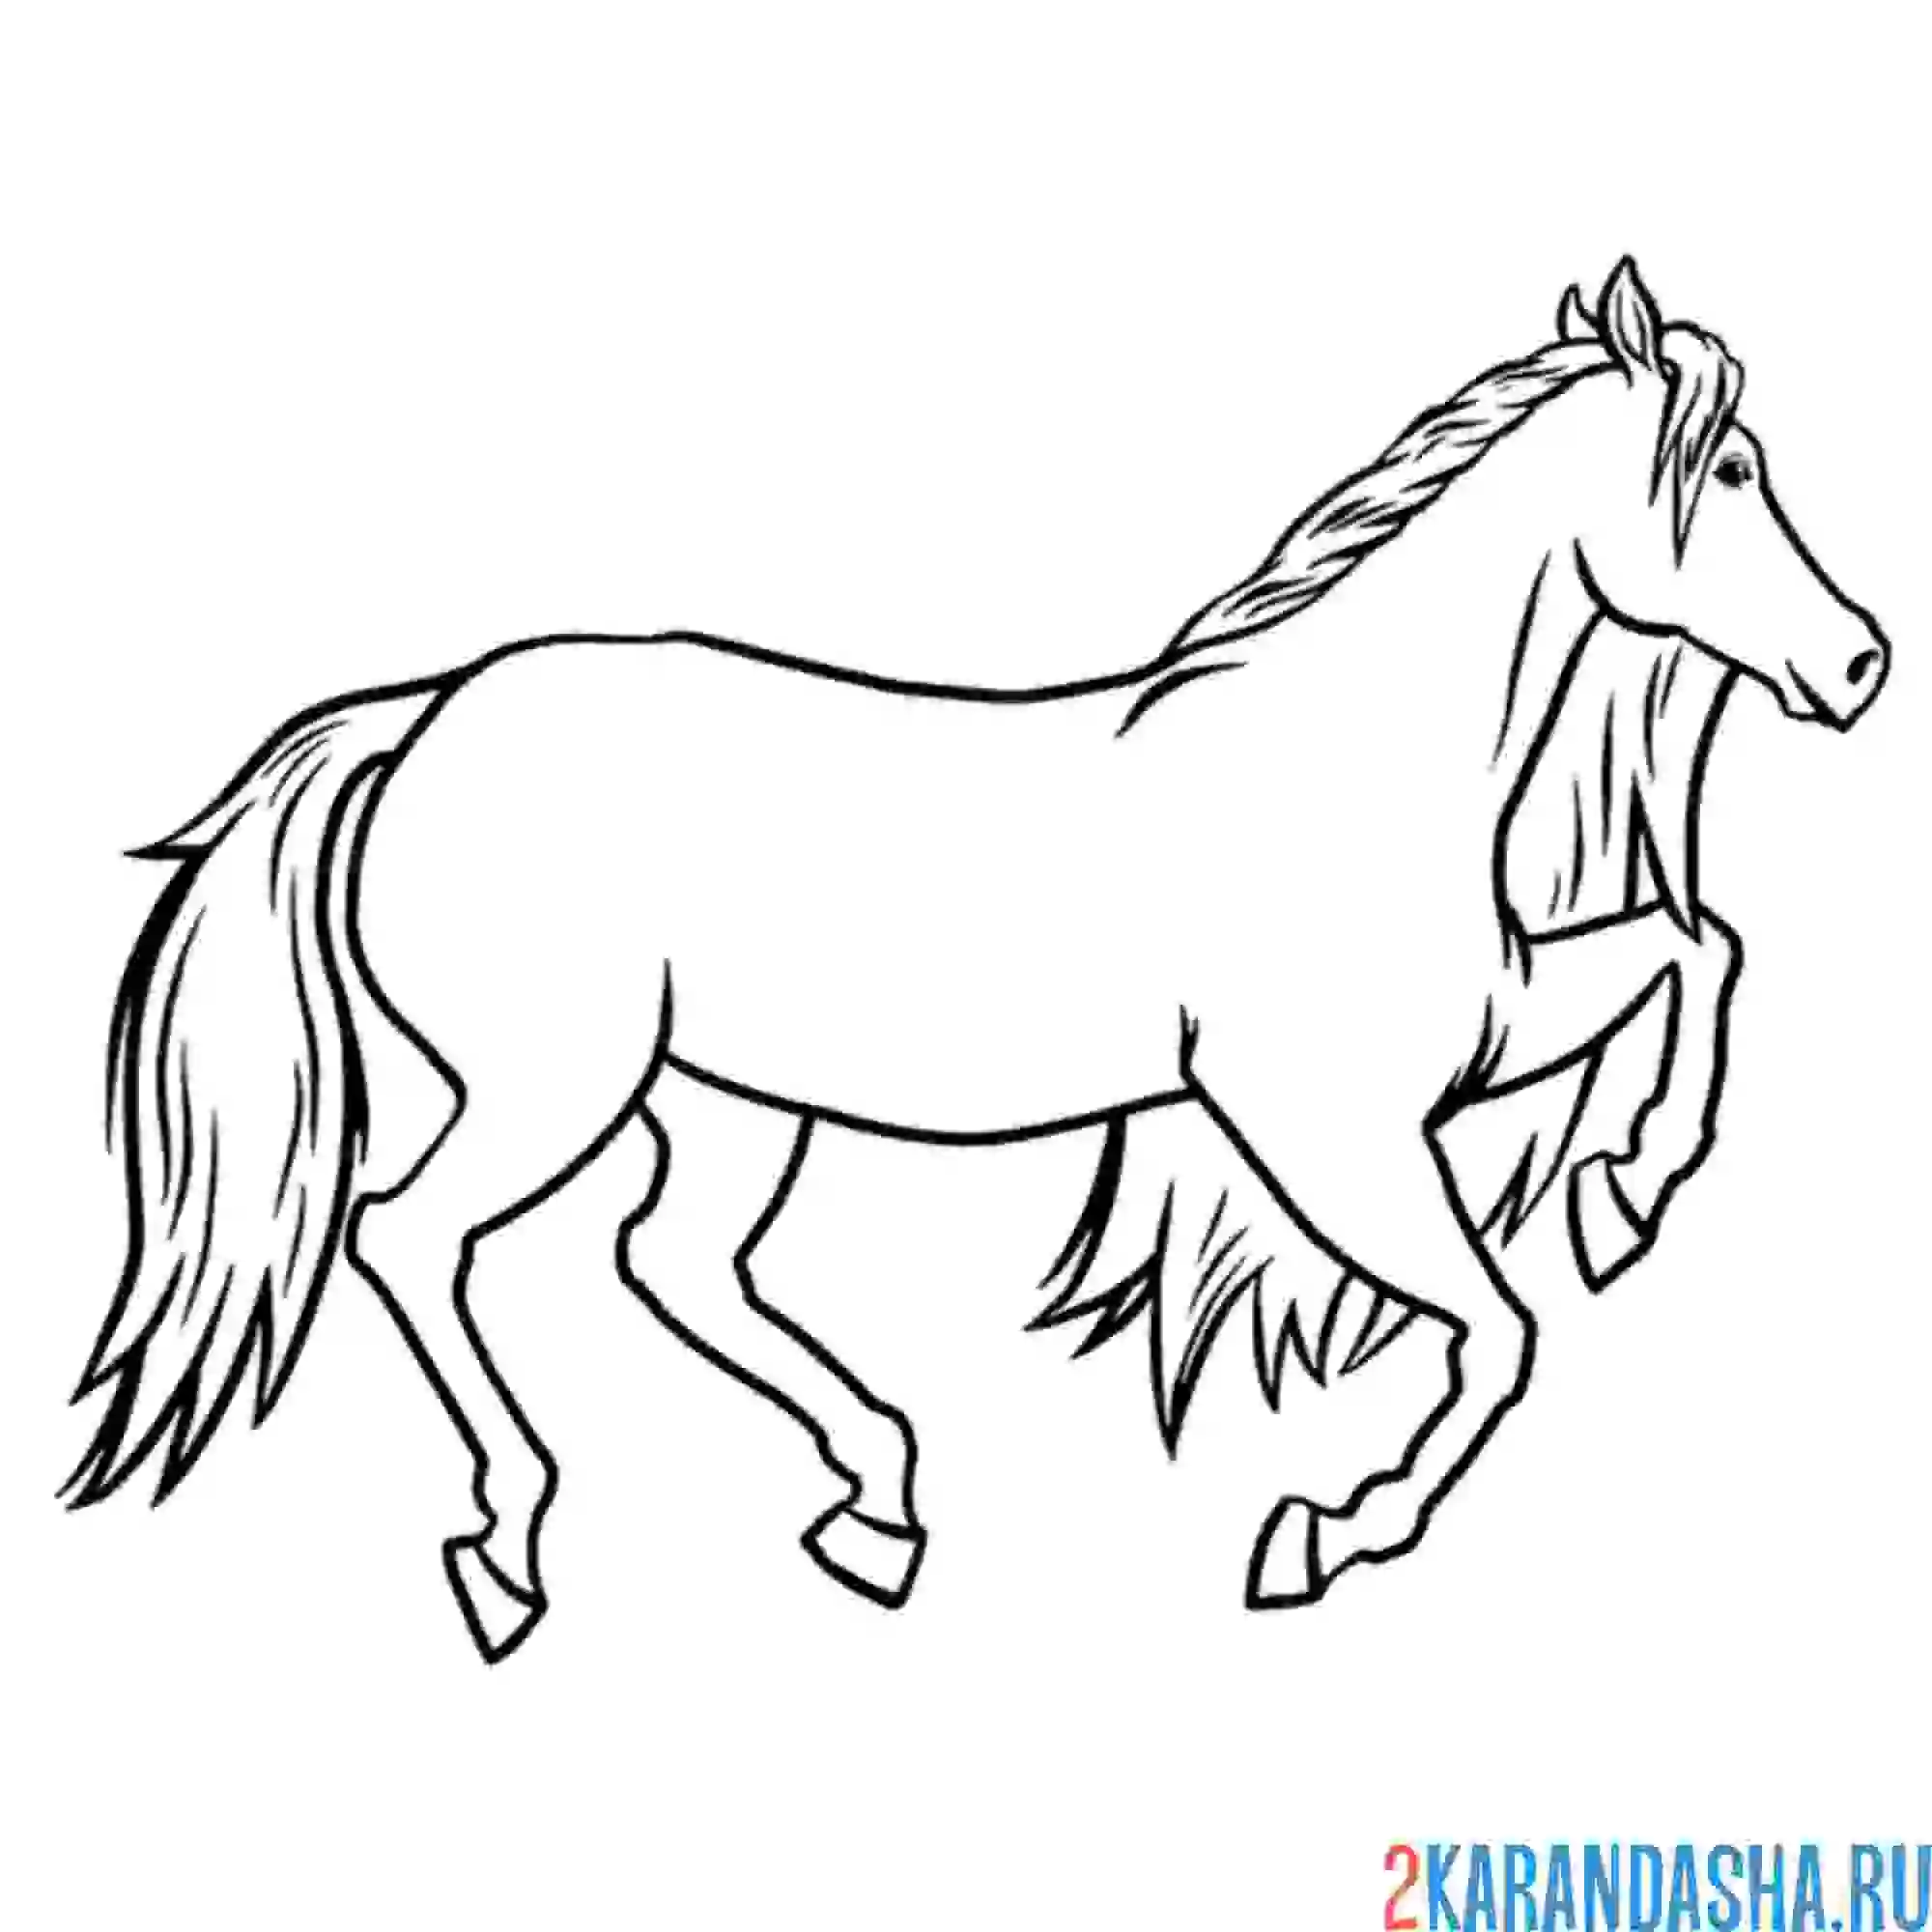 Раскраска простая лошадь